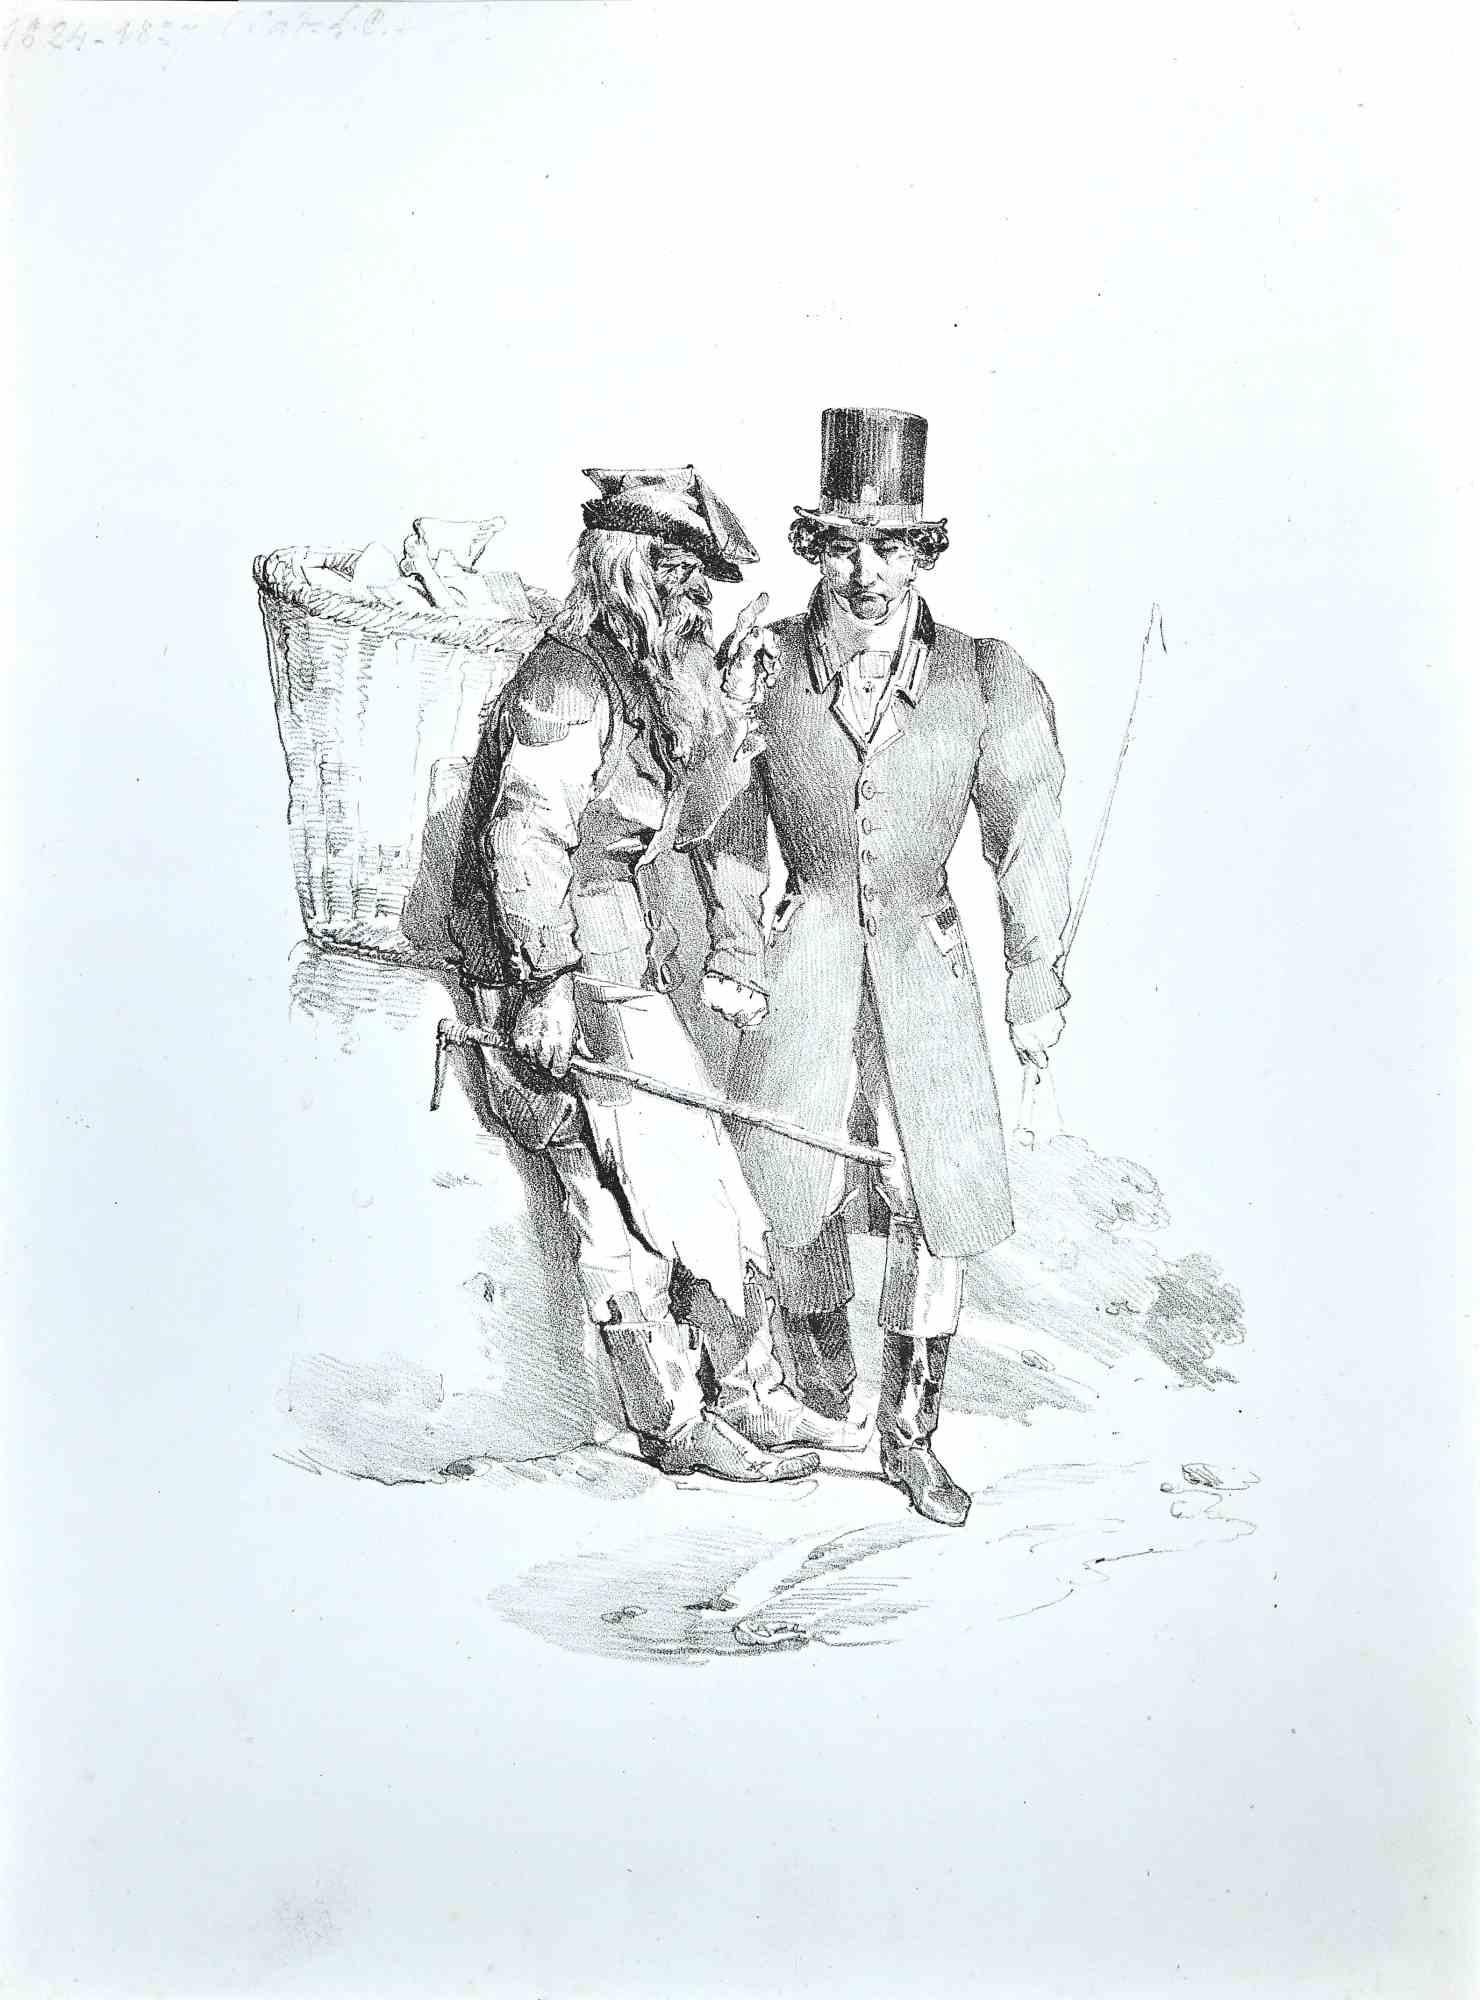 The Gentleman and the Wayfarer - Original Etching - Late-19th Century